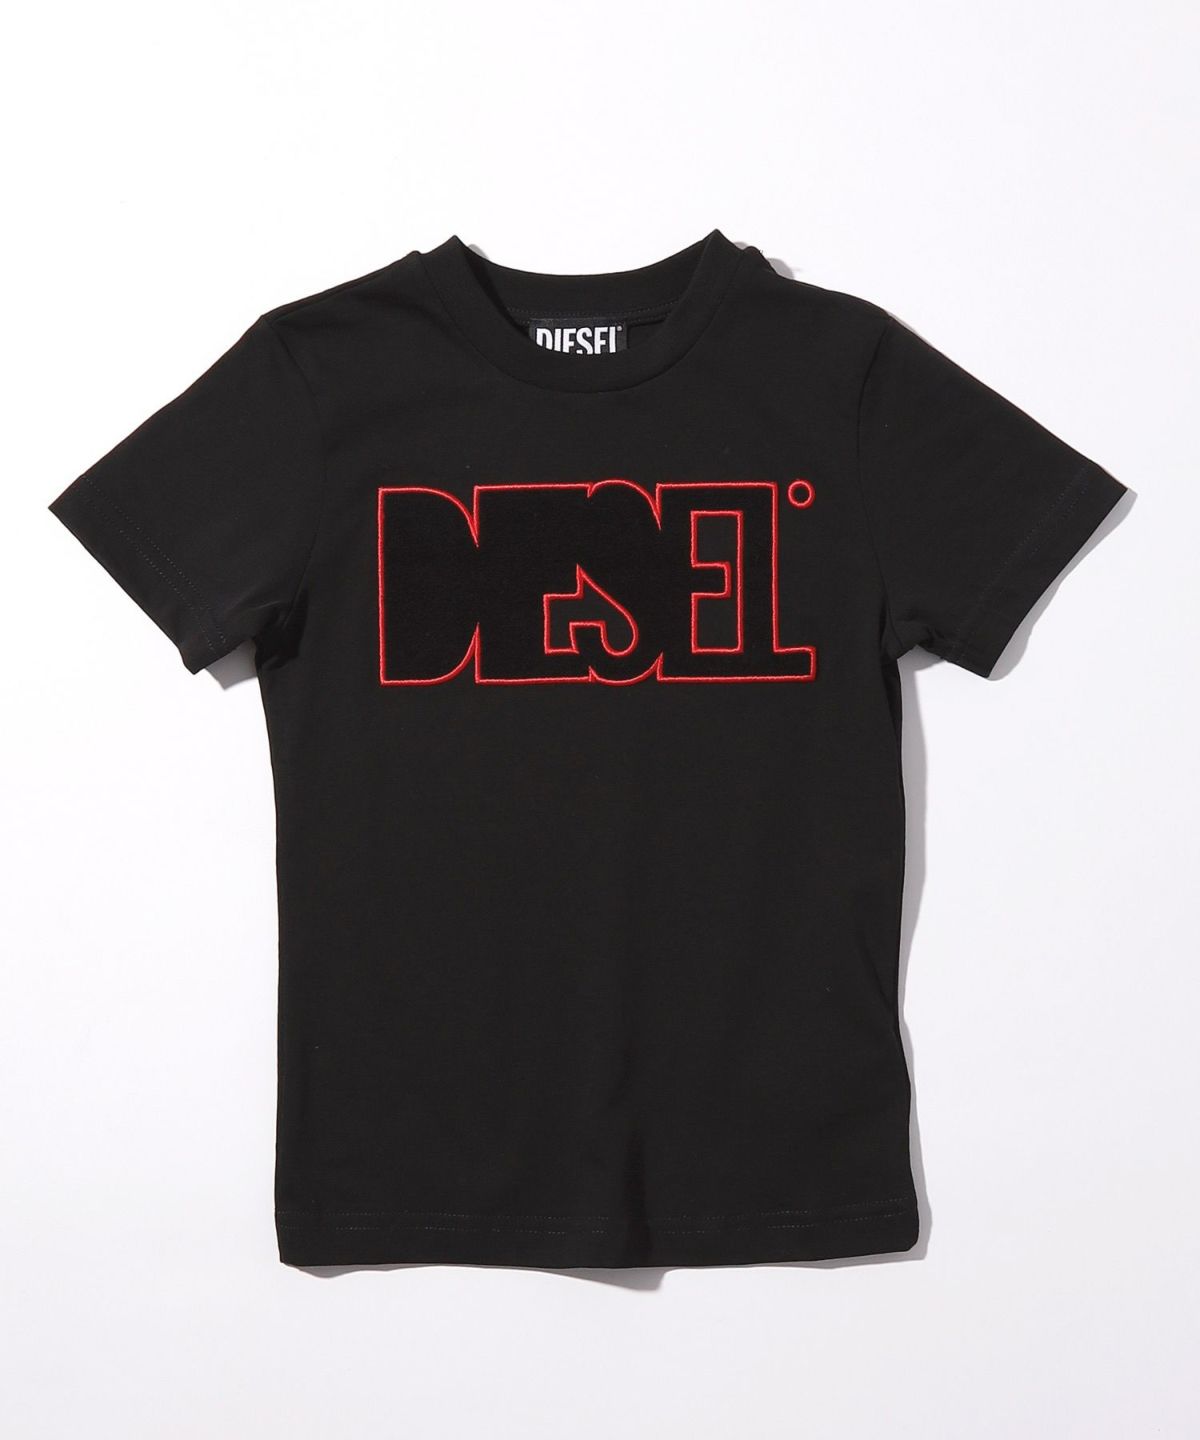 DIESEL(ディーゼル)Kids & Junior ブランドロゴ半袖Tシャツ 